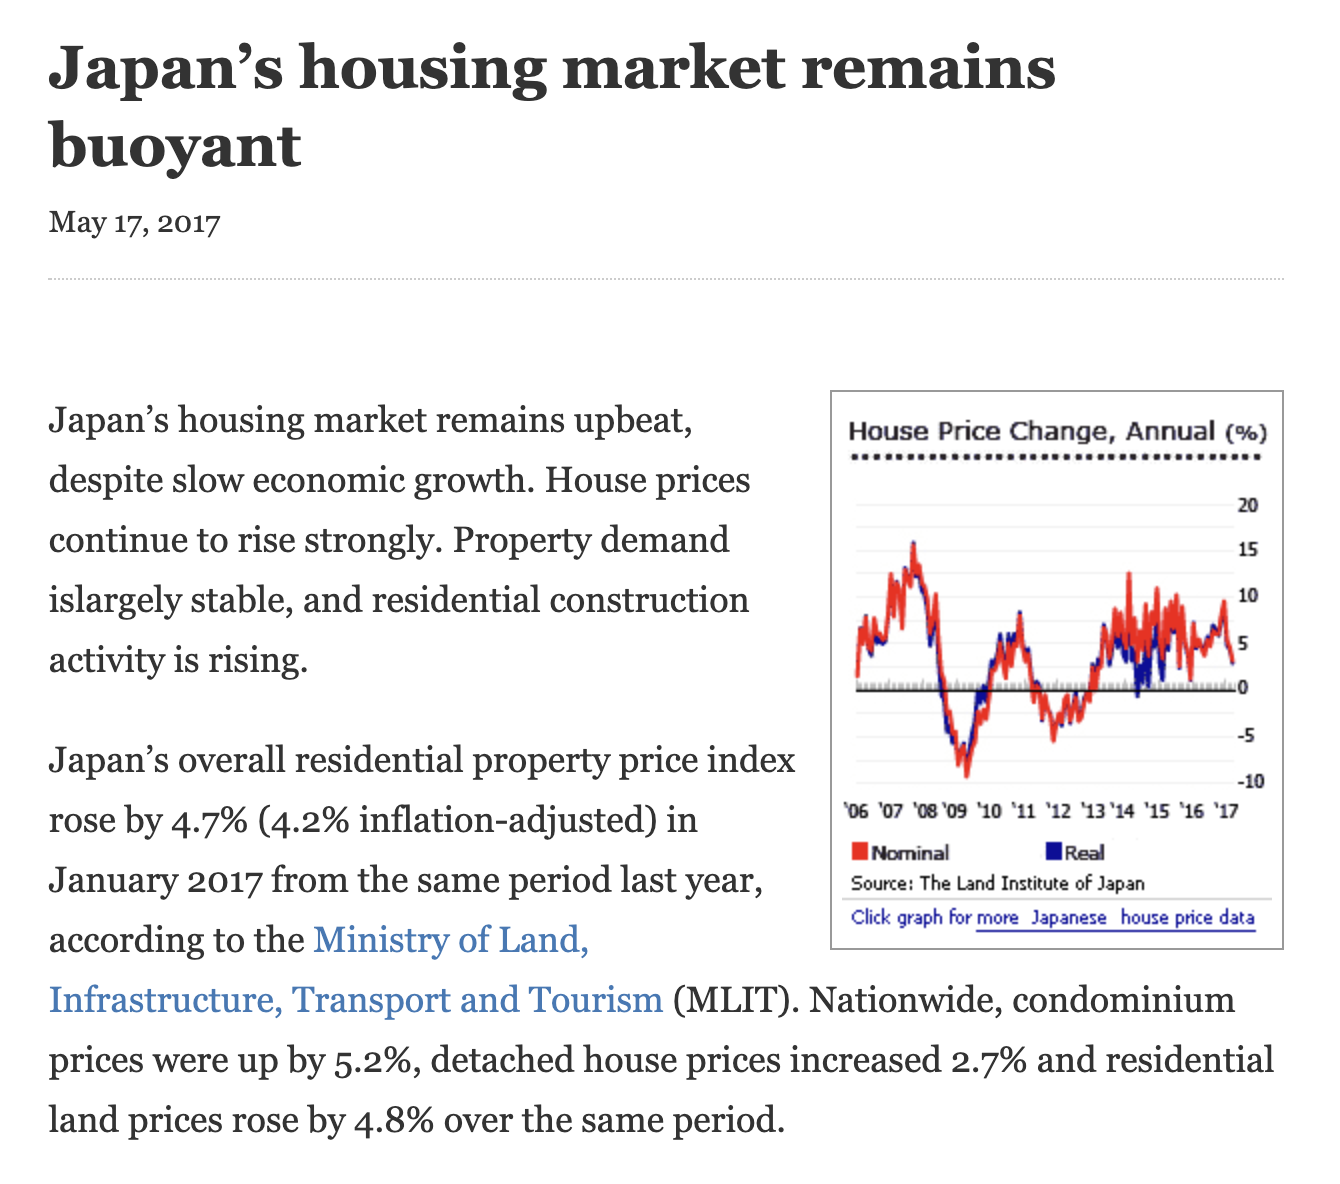 Japan’s housing market remains buoyant